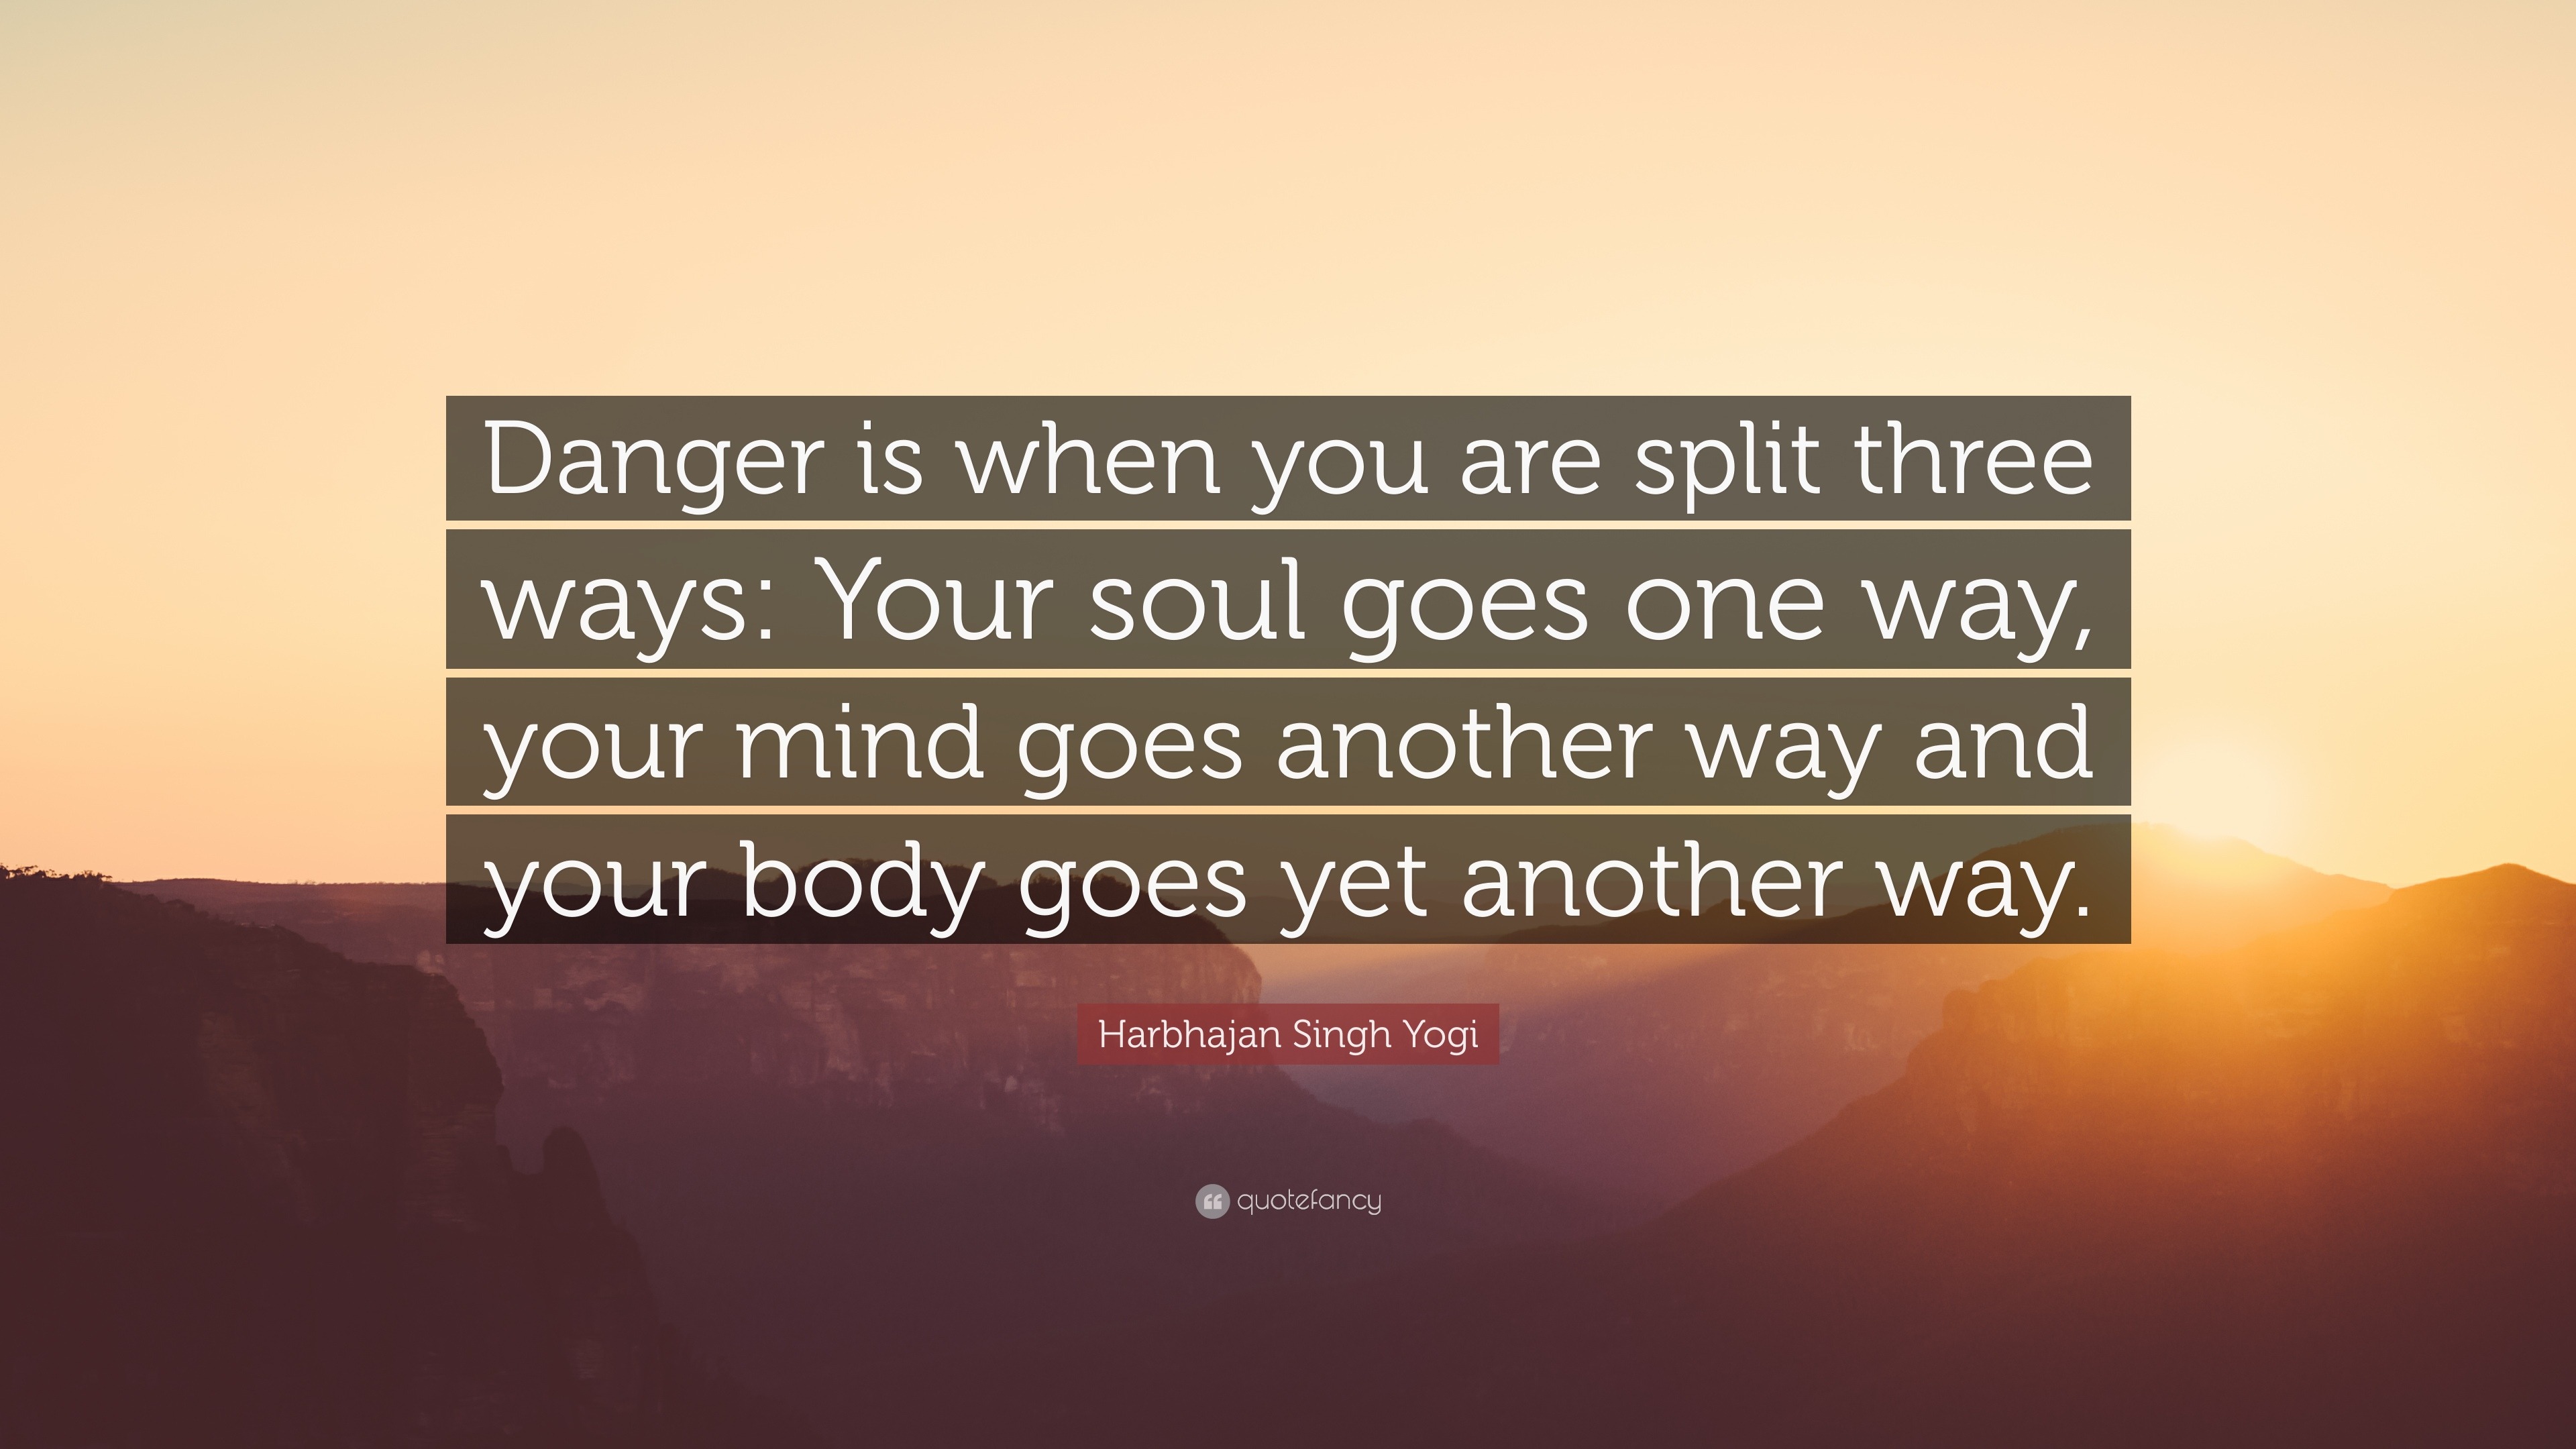 Harbhajan Singh Yogi Quote: “Danger is when you are split three ways ...